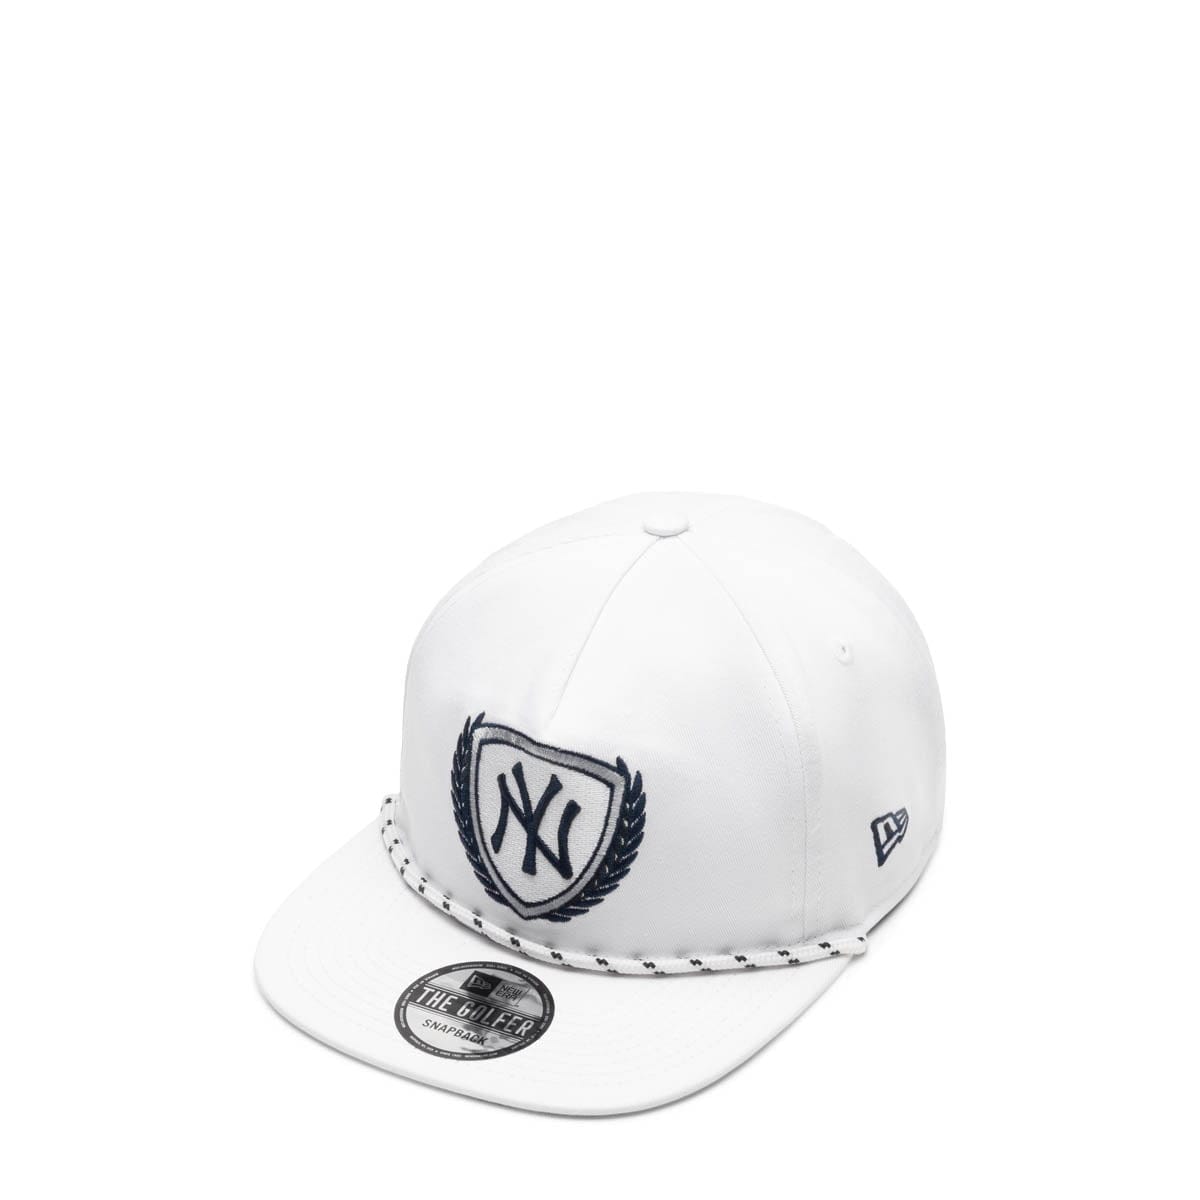 New Era Yankees Hat Snap back. Rare,! 